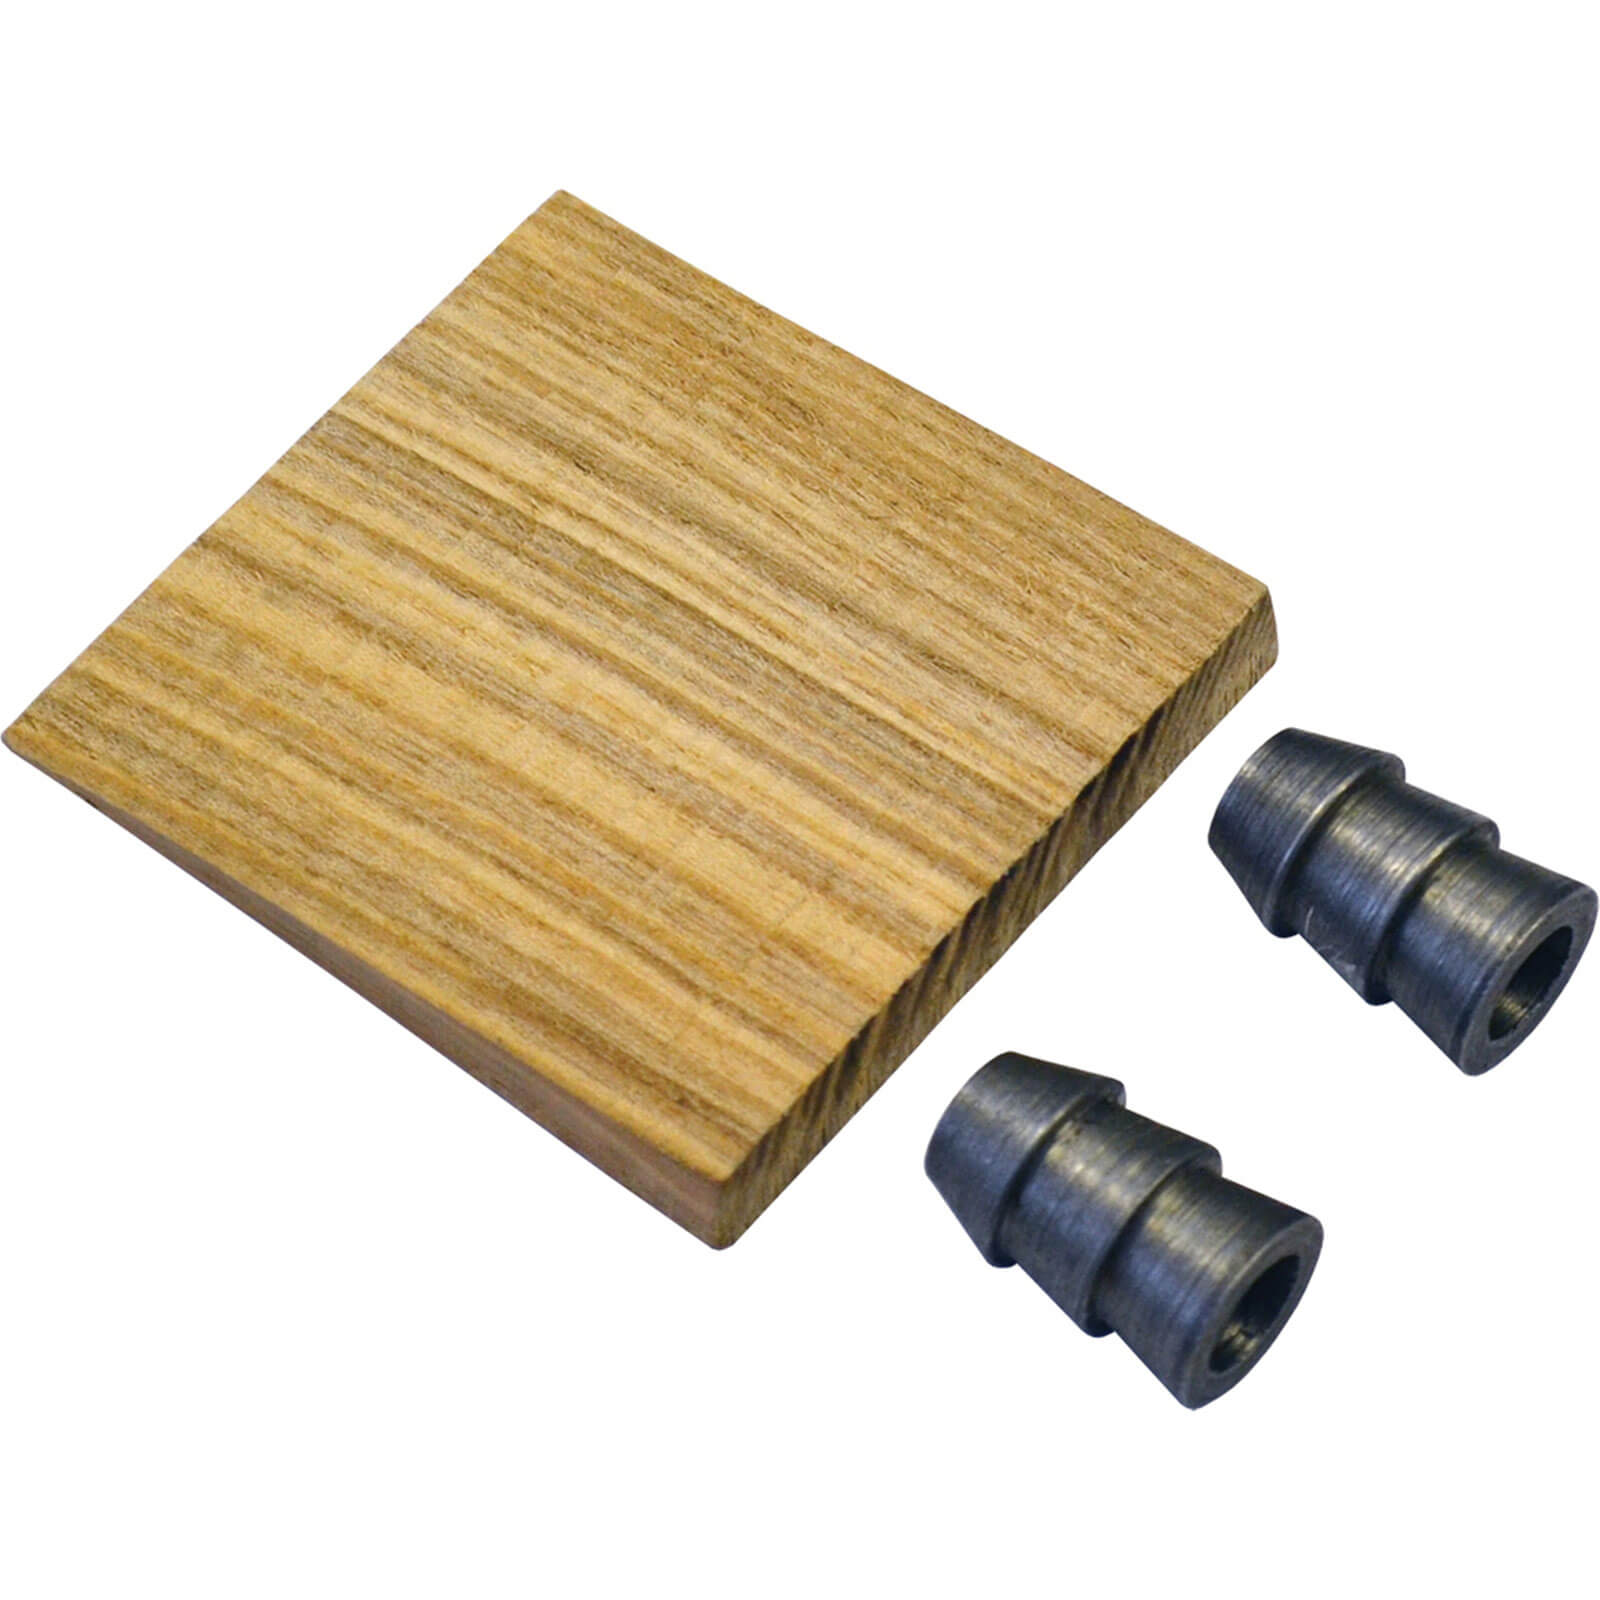 Image of Faithfull Hammer Wedges and Timber Wedges Size 5